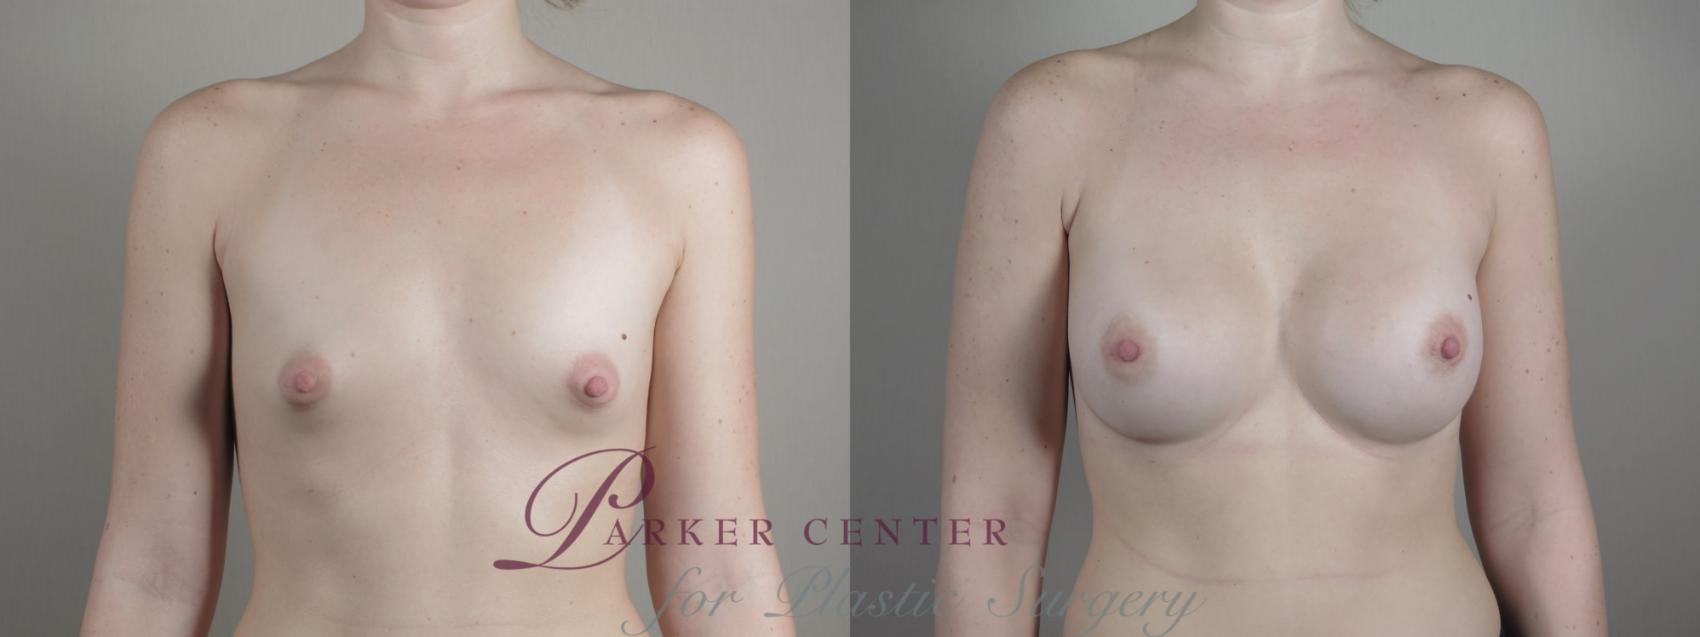 Breast Augmentation Case 1000 Before & After Front | Paramus, NJ | Parker Center for Plastic Surgery